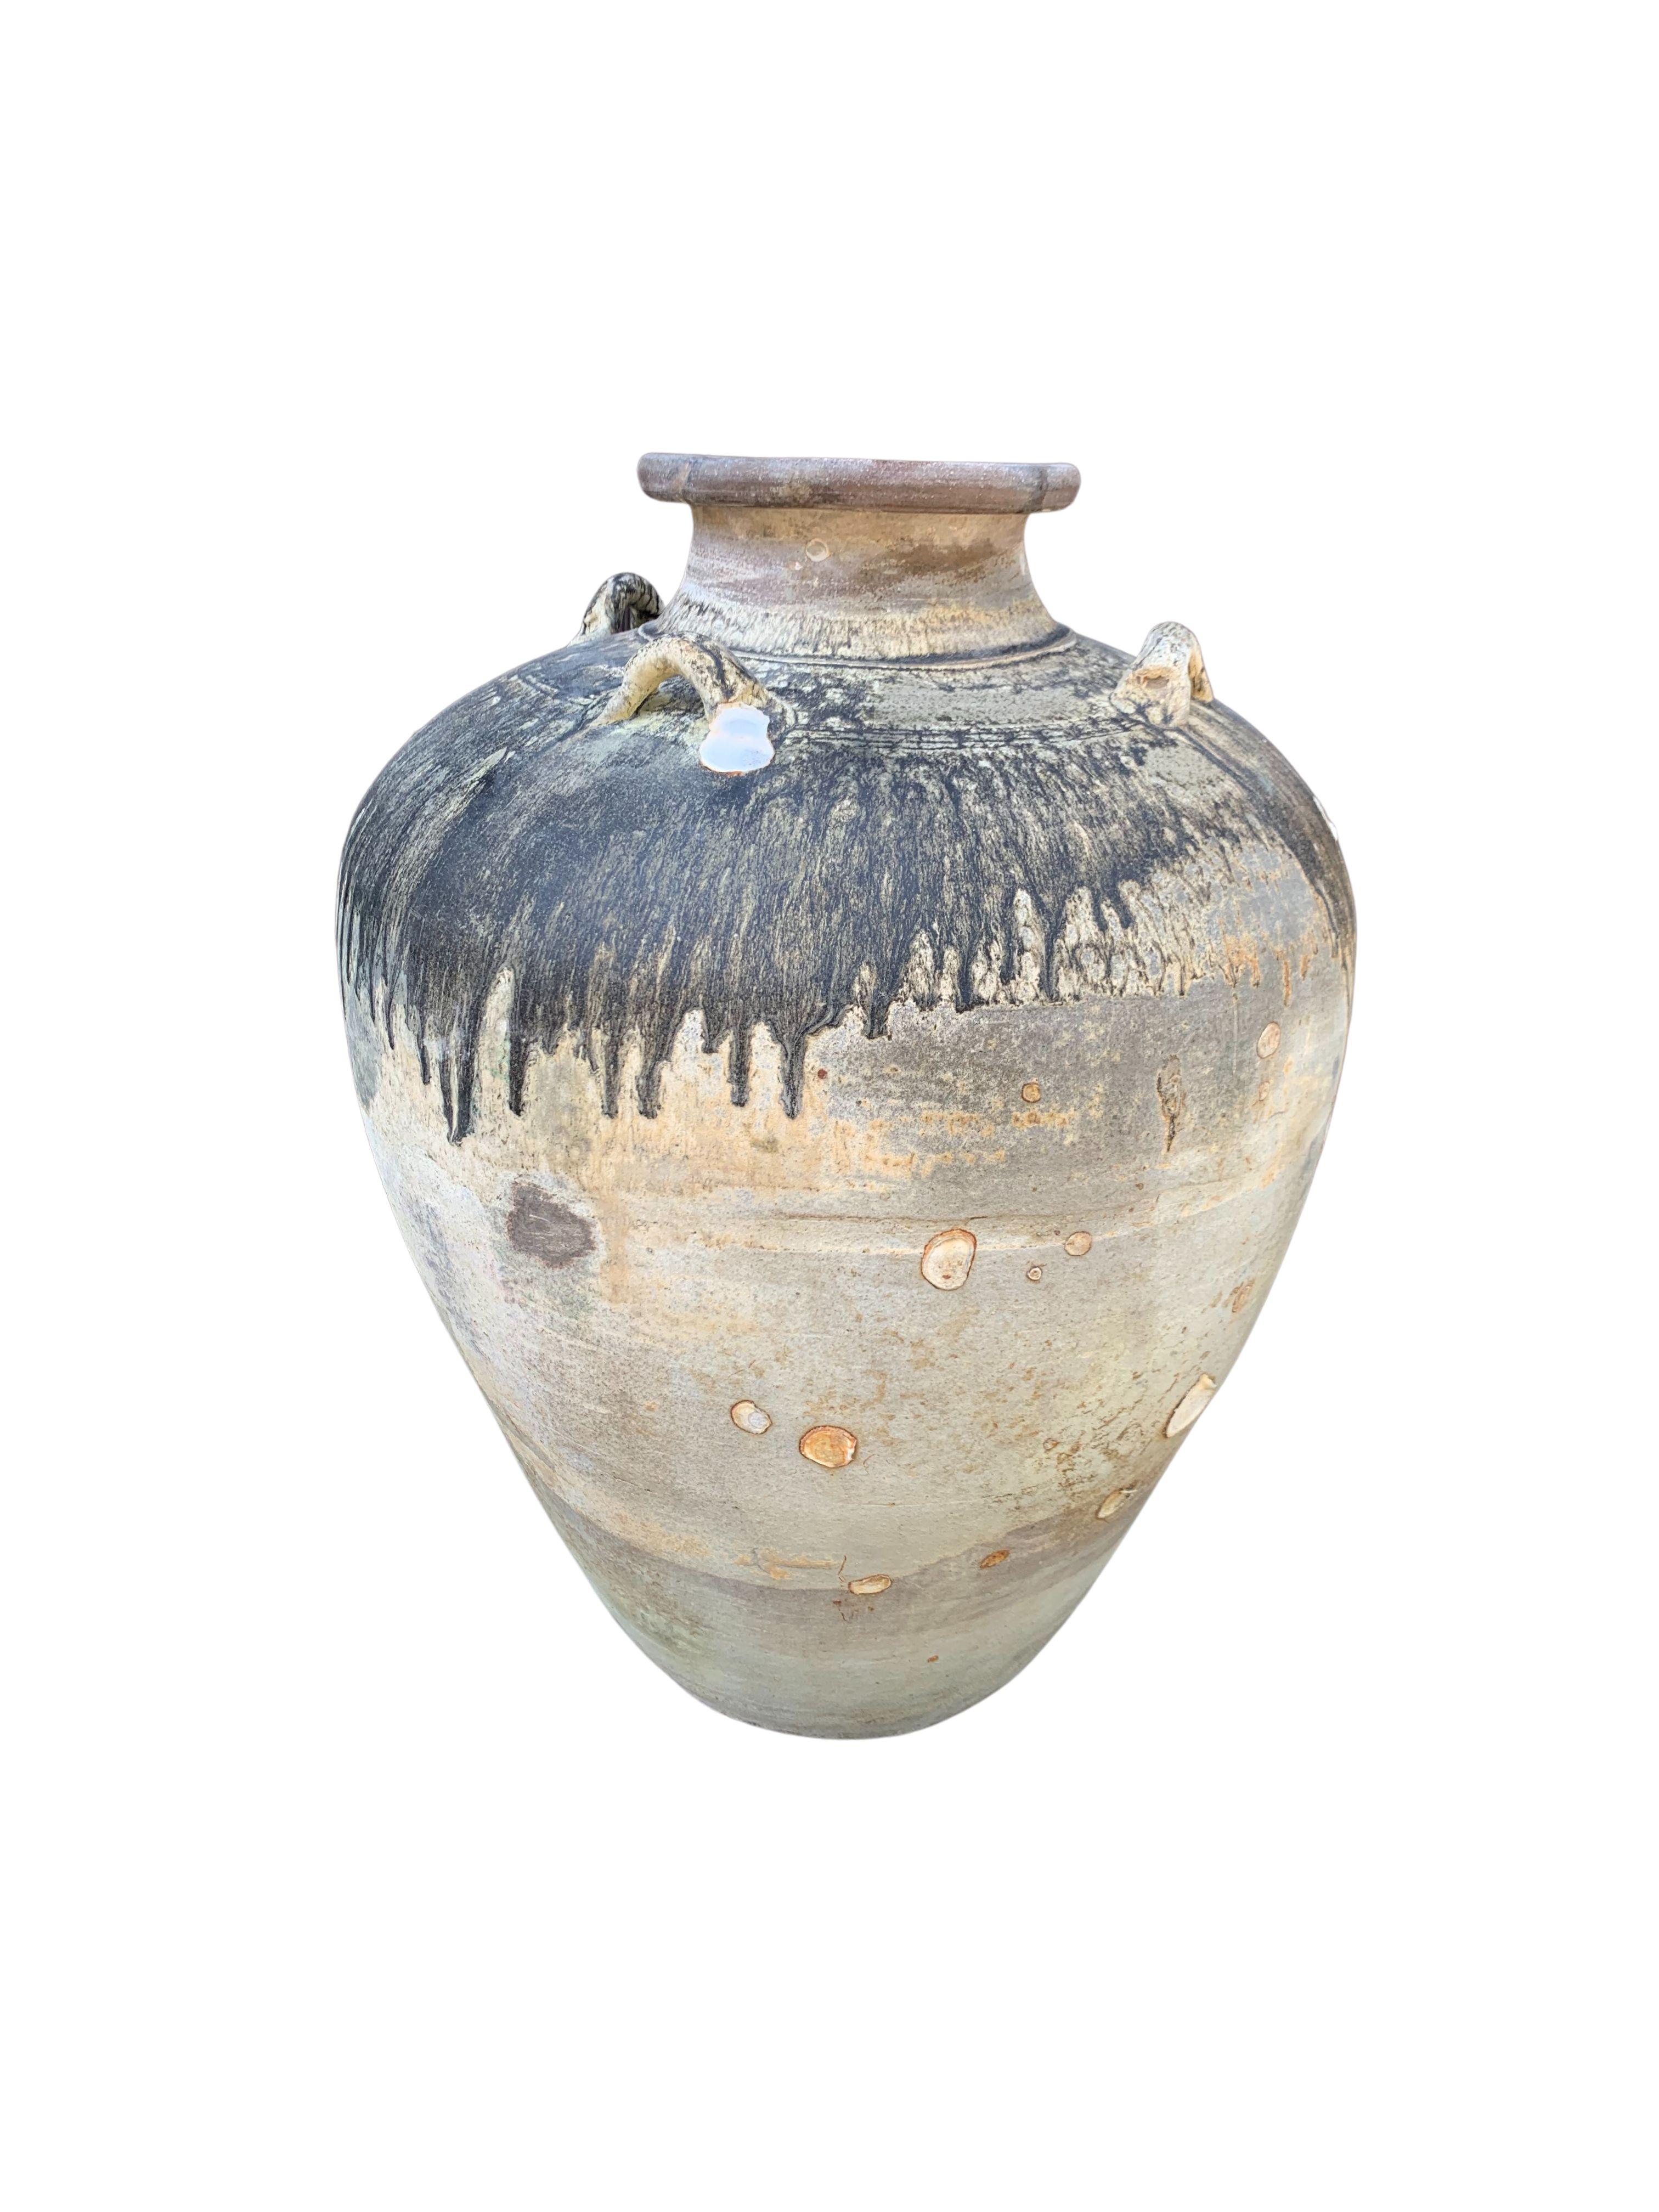 Ceramic Sawankhalok Ship Wreck Jar From the Kingdom of Sukhothai, Thailand, 16th Century